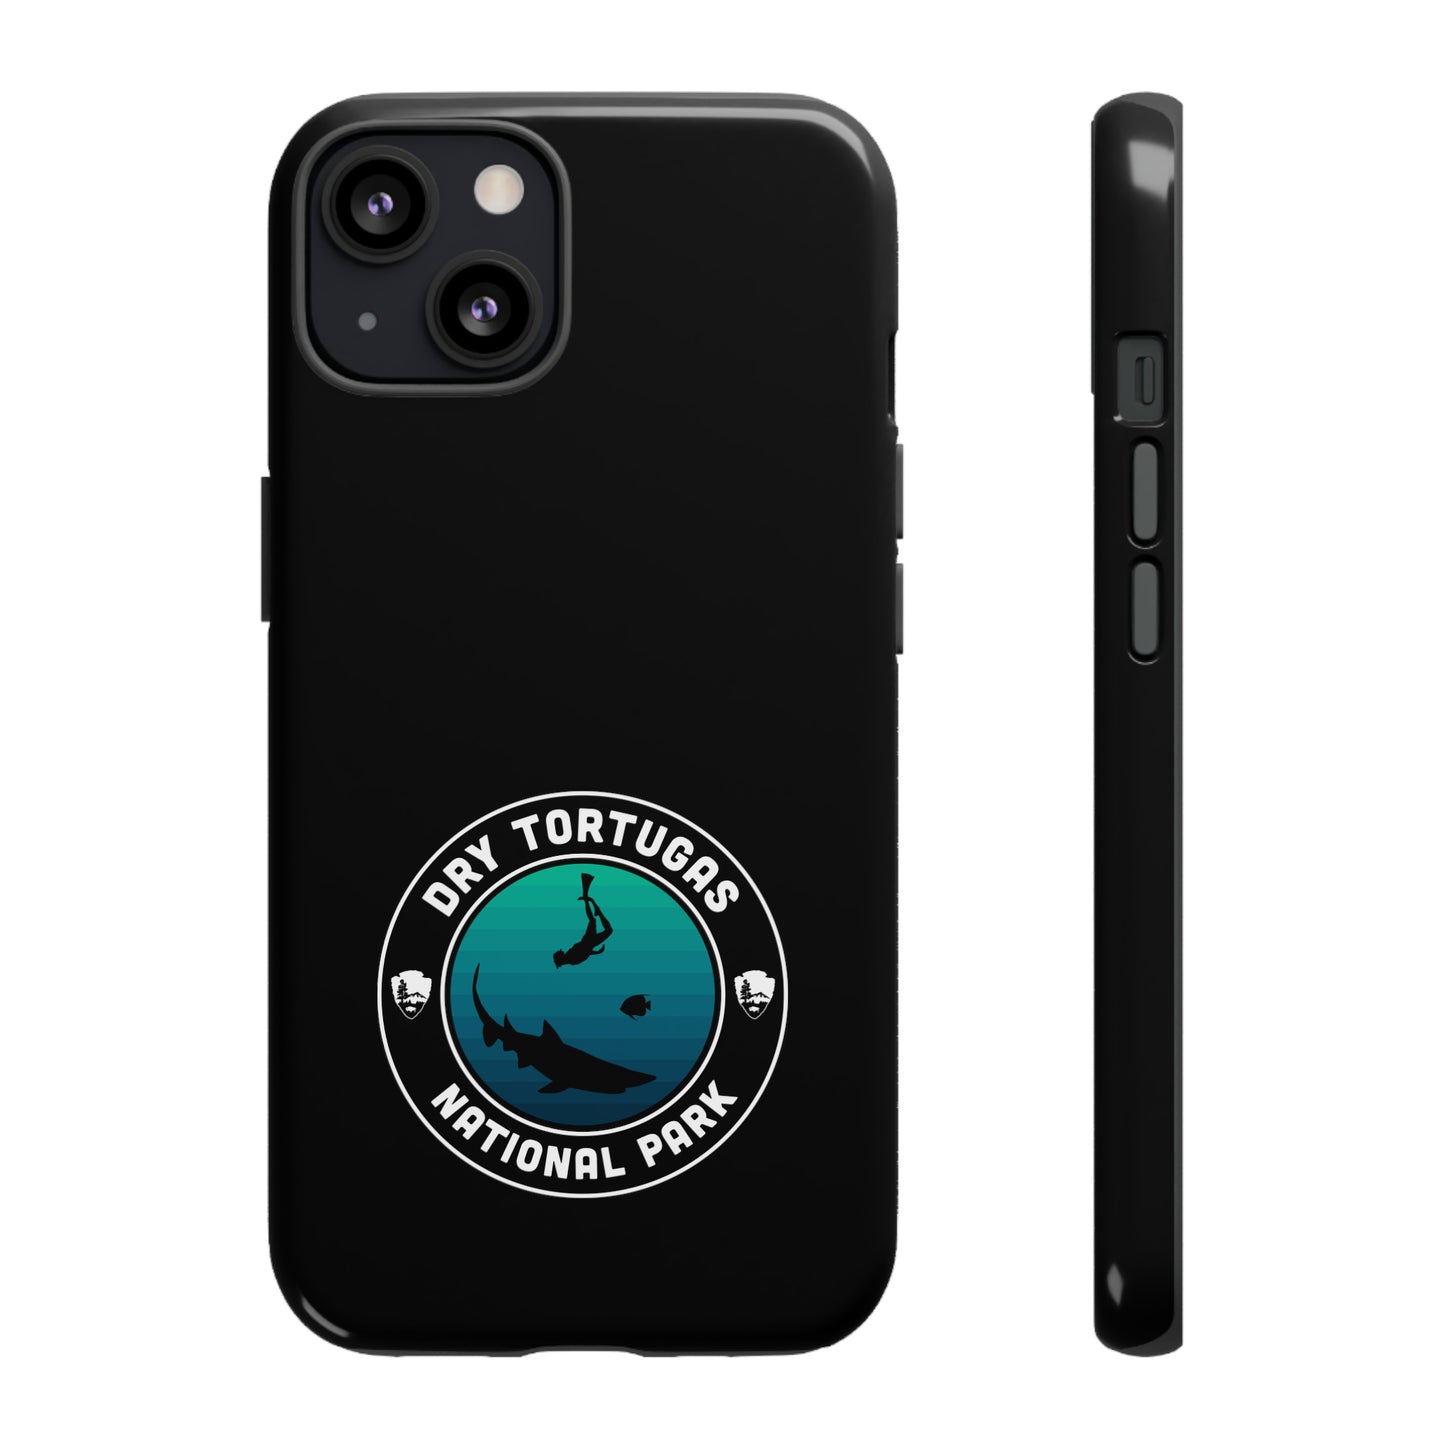 Dry Tortugas National Park Phone Case - Round Emblem Design